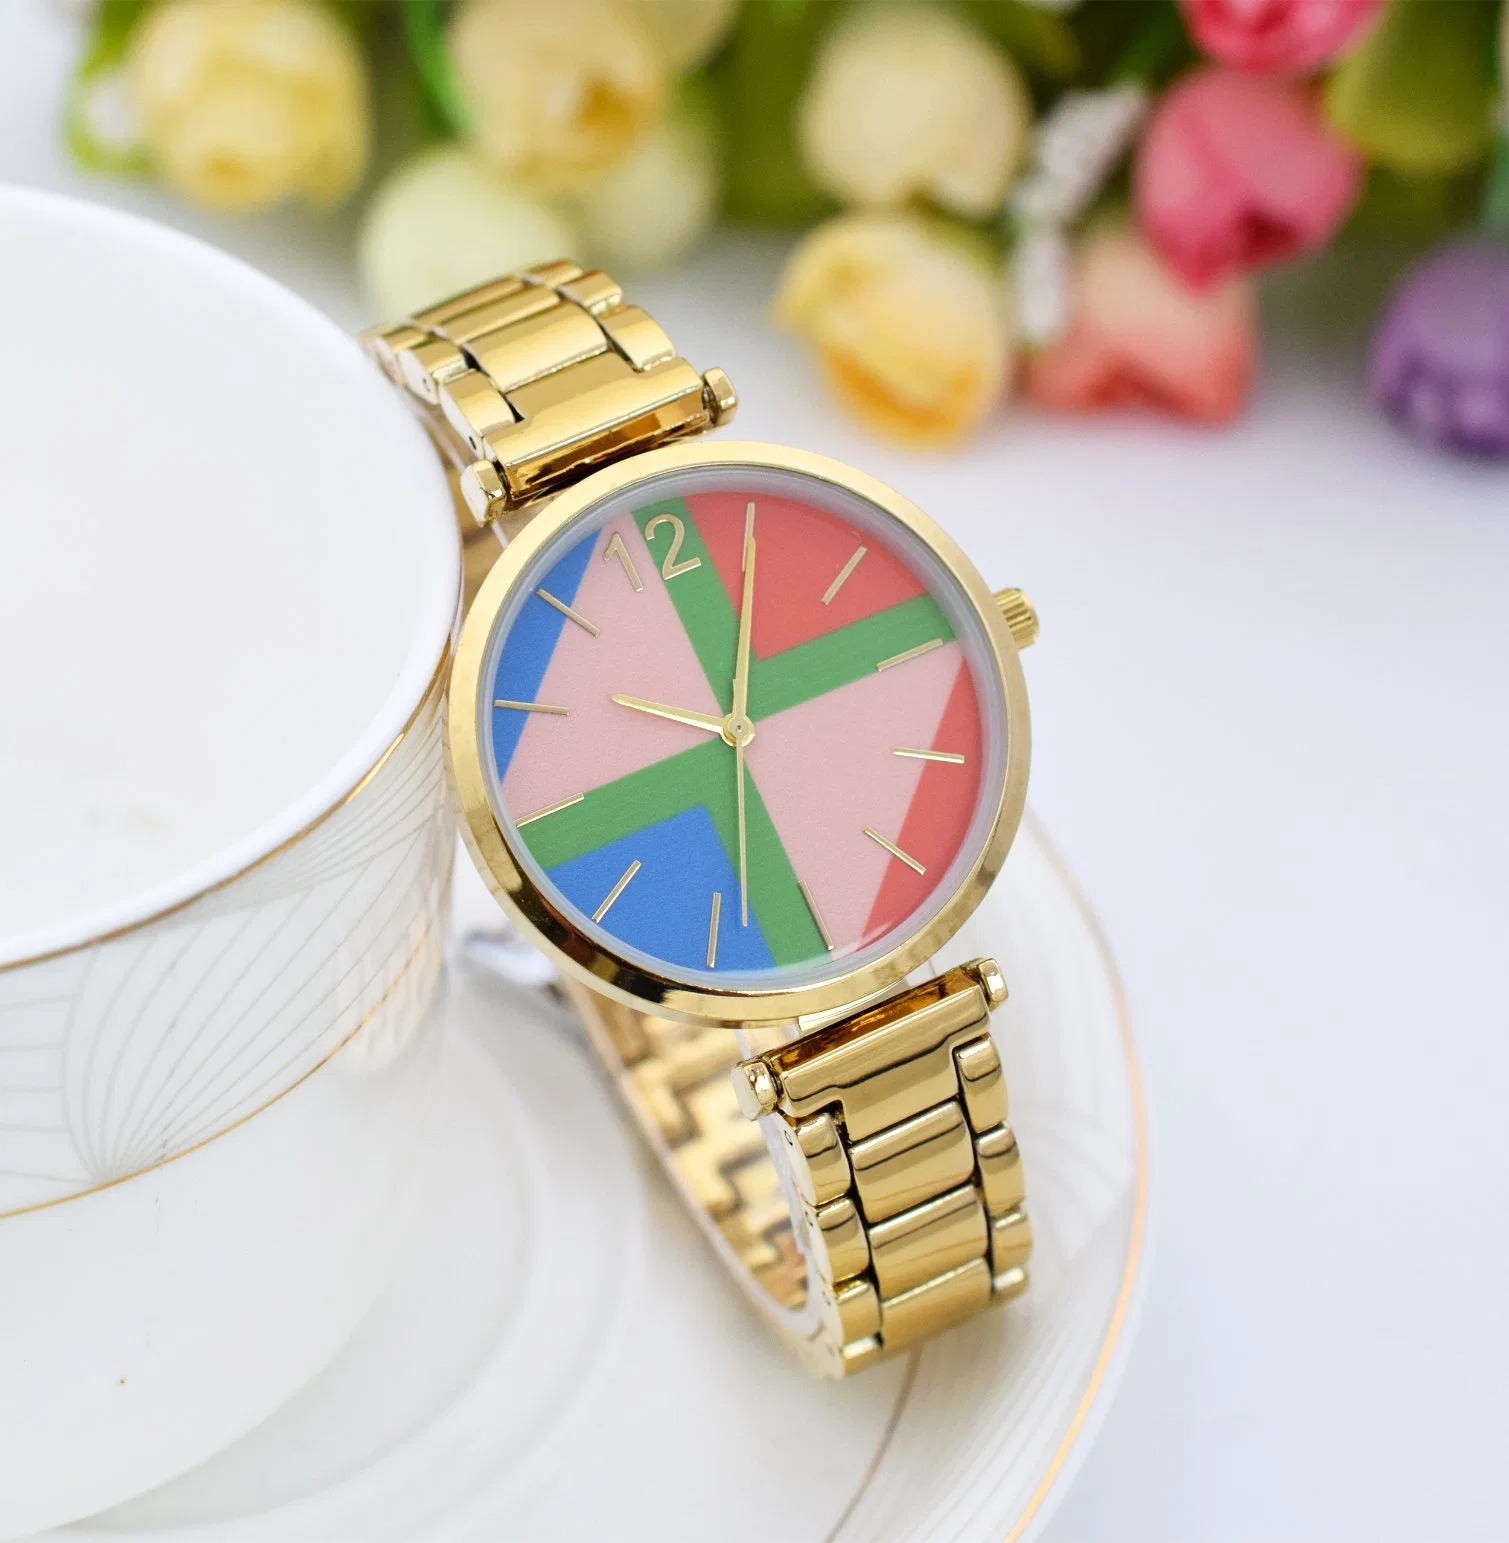 Stainless Steel Watch Gift Watch Quartz Watch Fashion Watch Lady Promotional Watch Alloy Watch